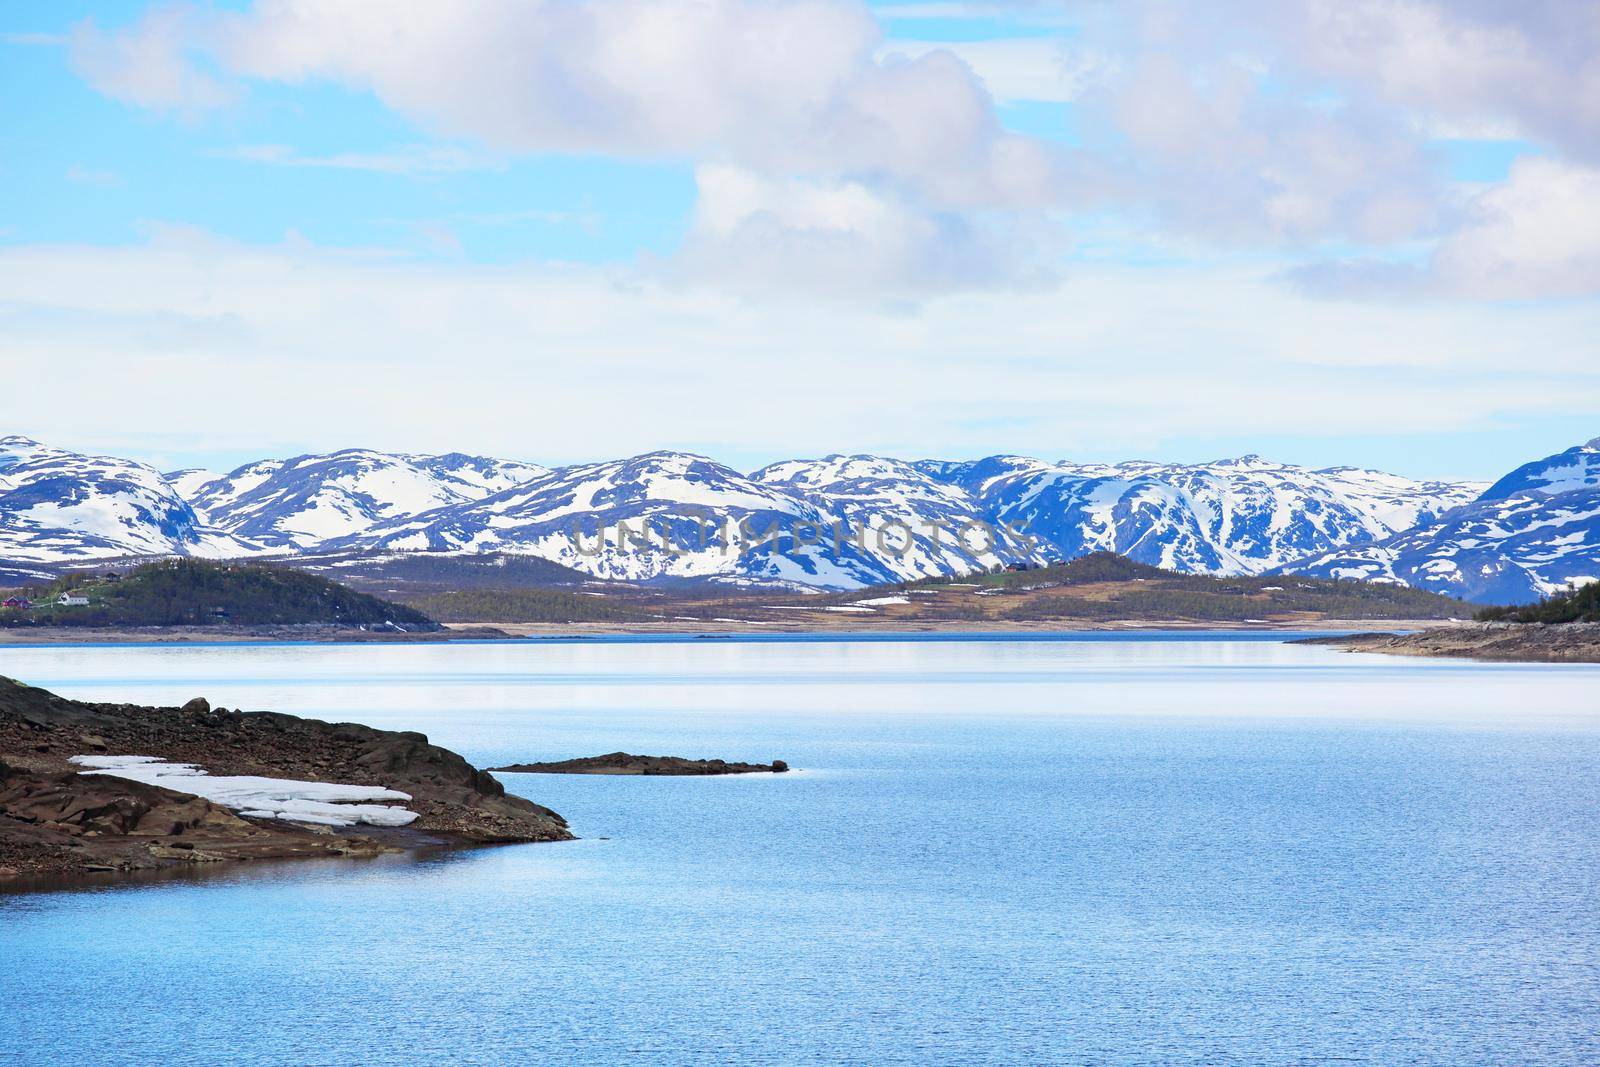 Spring arctic landscape by destillat